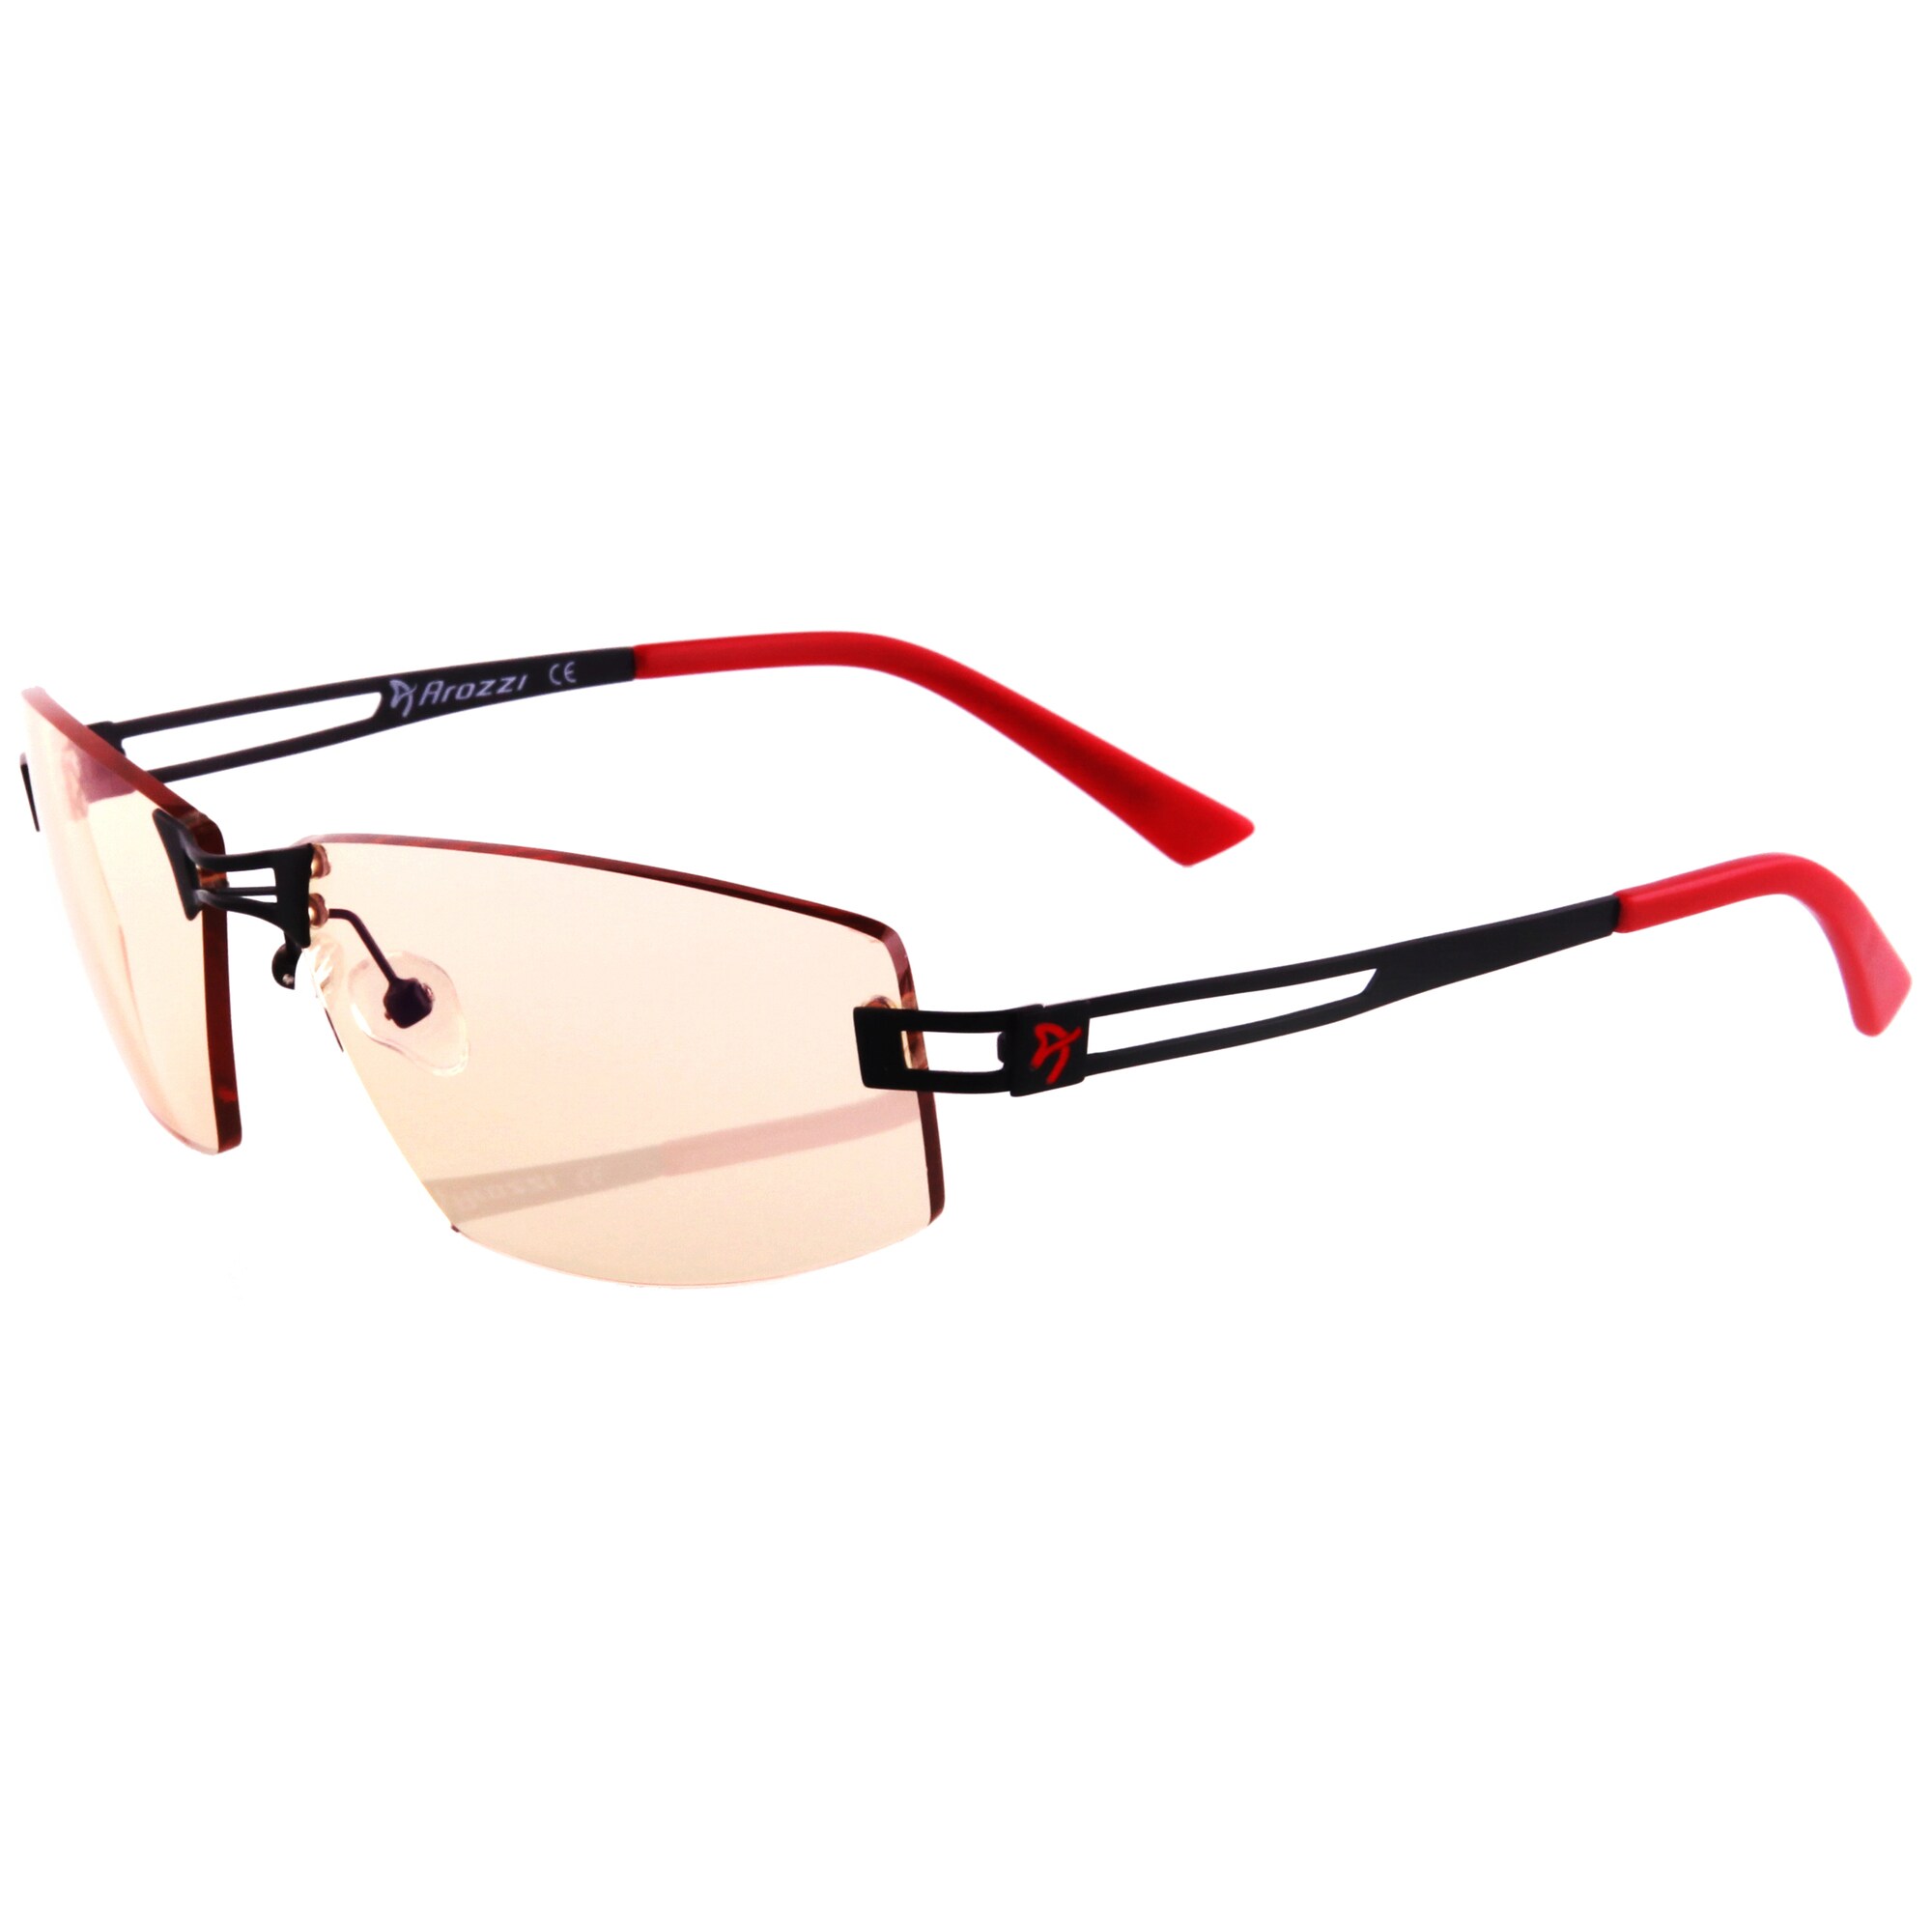 Arozzi Visione VX600 gamingbriller (sort/rød) - Elkjøp